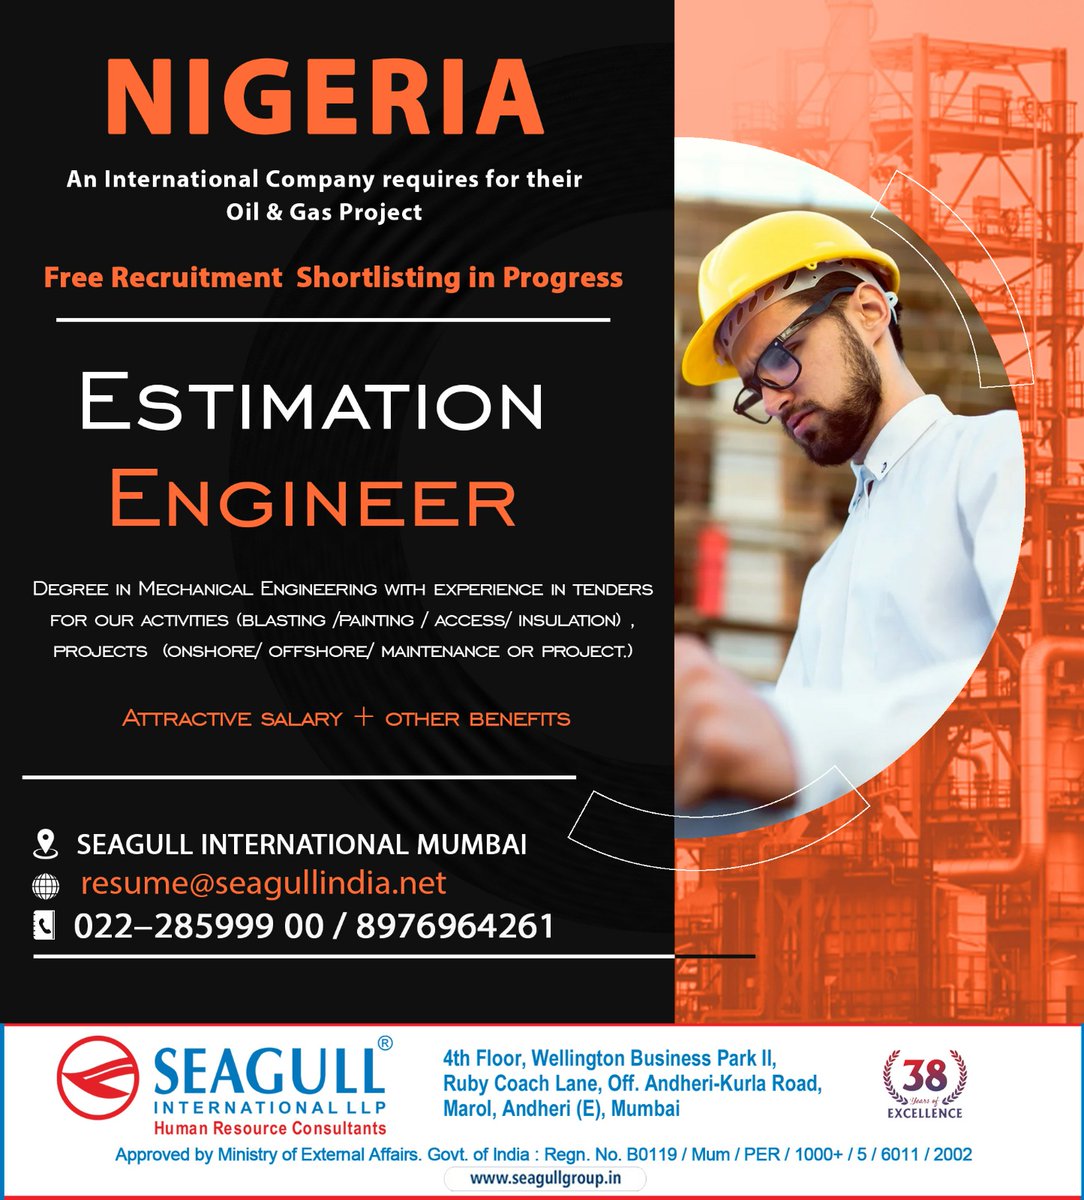 NIGERIA JOBS
FREE RECRUITMENT
SHORTLISTING IN PROGRESS
.

.

.
#nigeriajobs #mumbaijobs #estimationengineer #freerecruitment